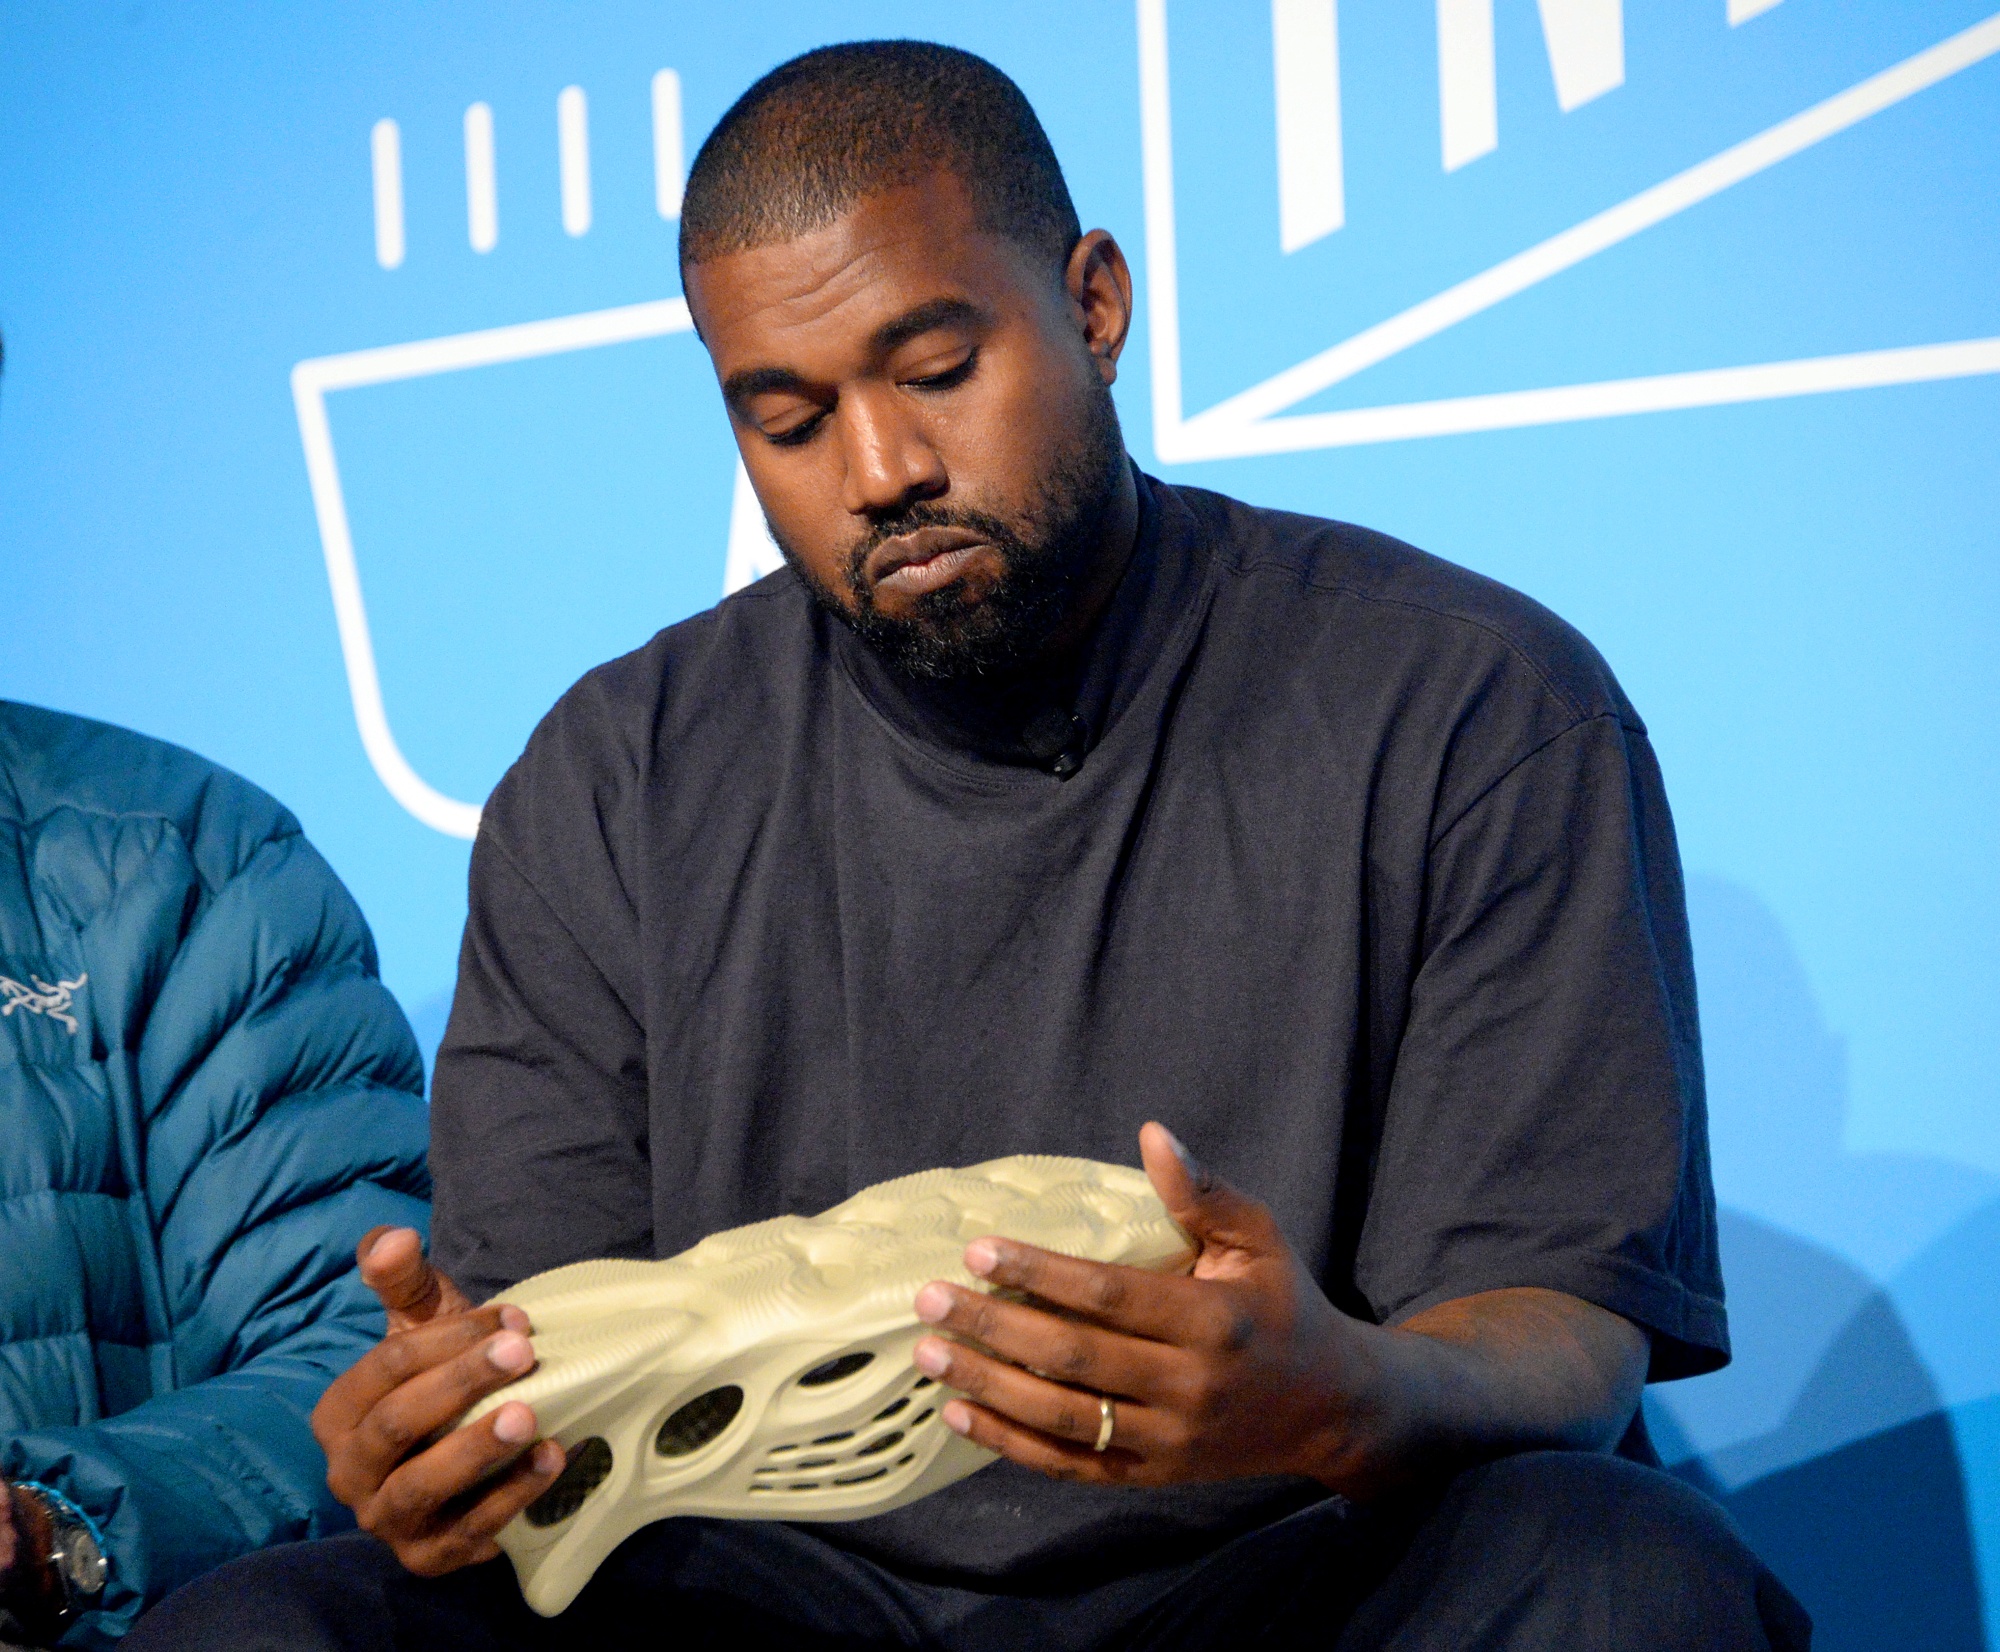 Adidas makes shocking sum off of Kanye West's leftover Yeezy shoes